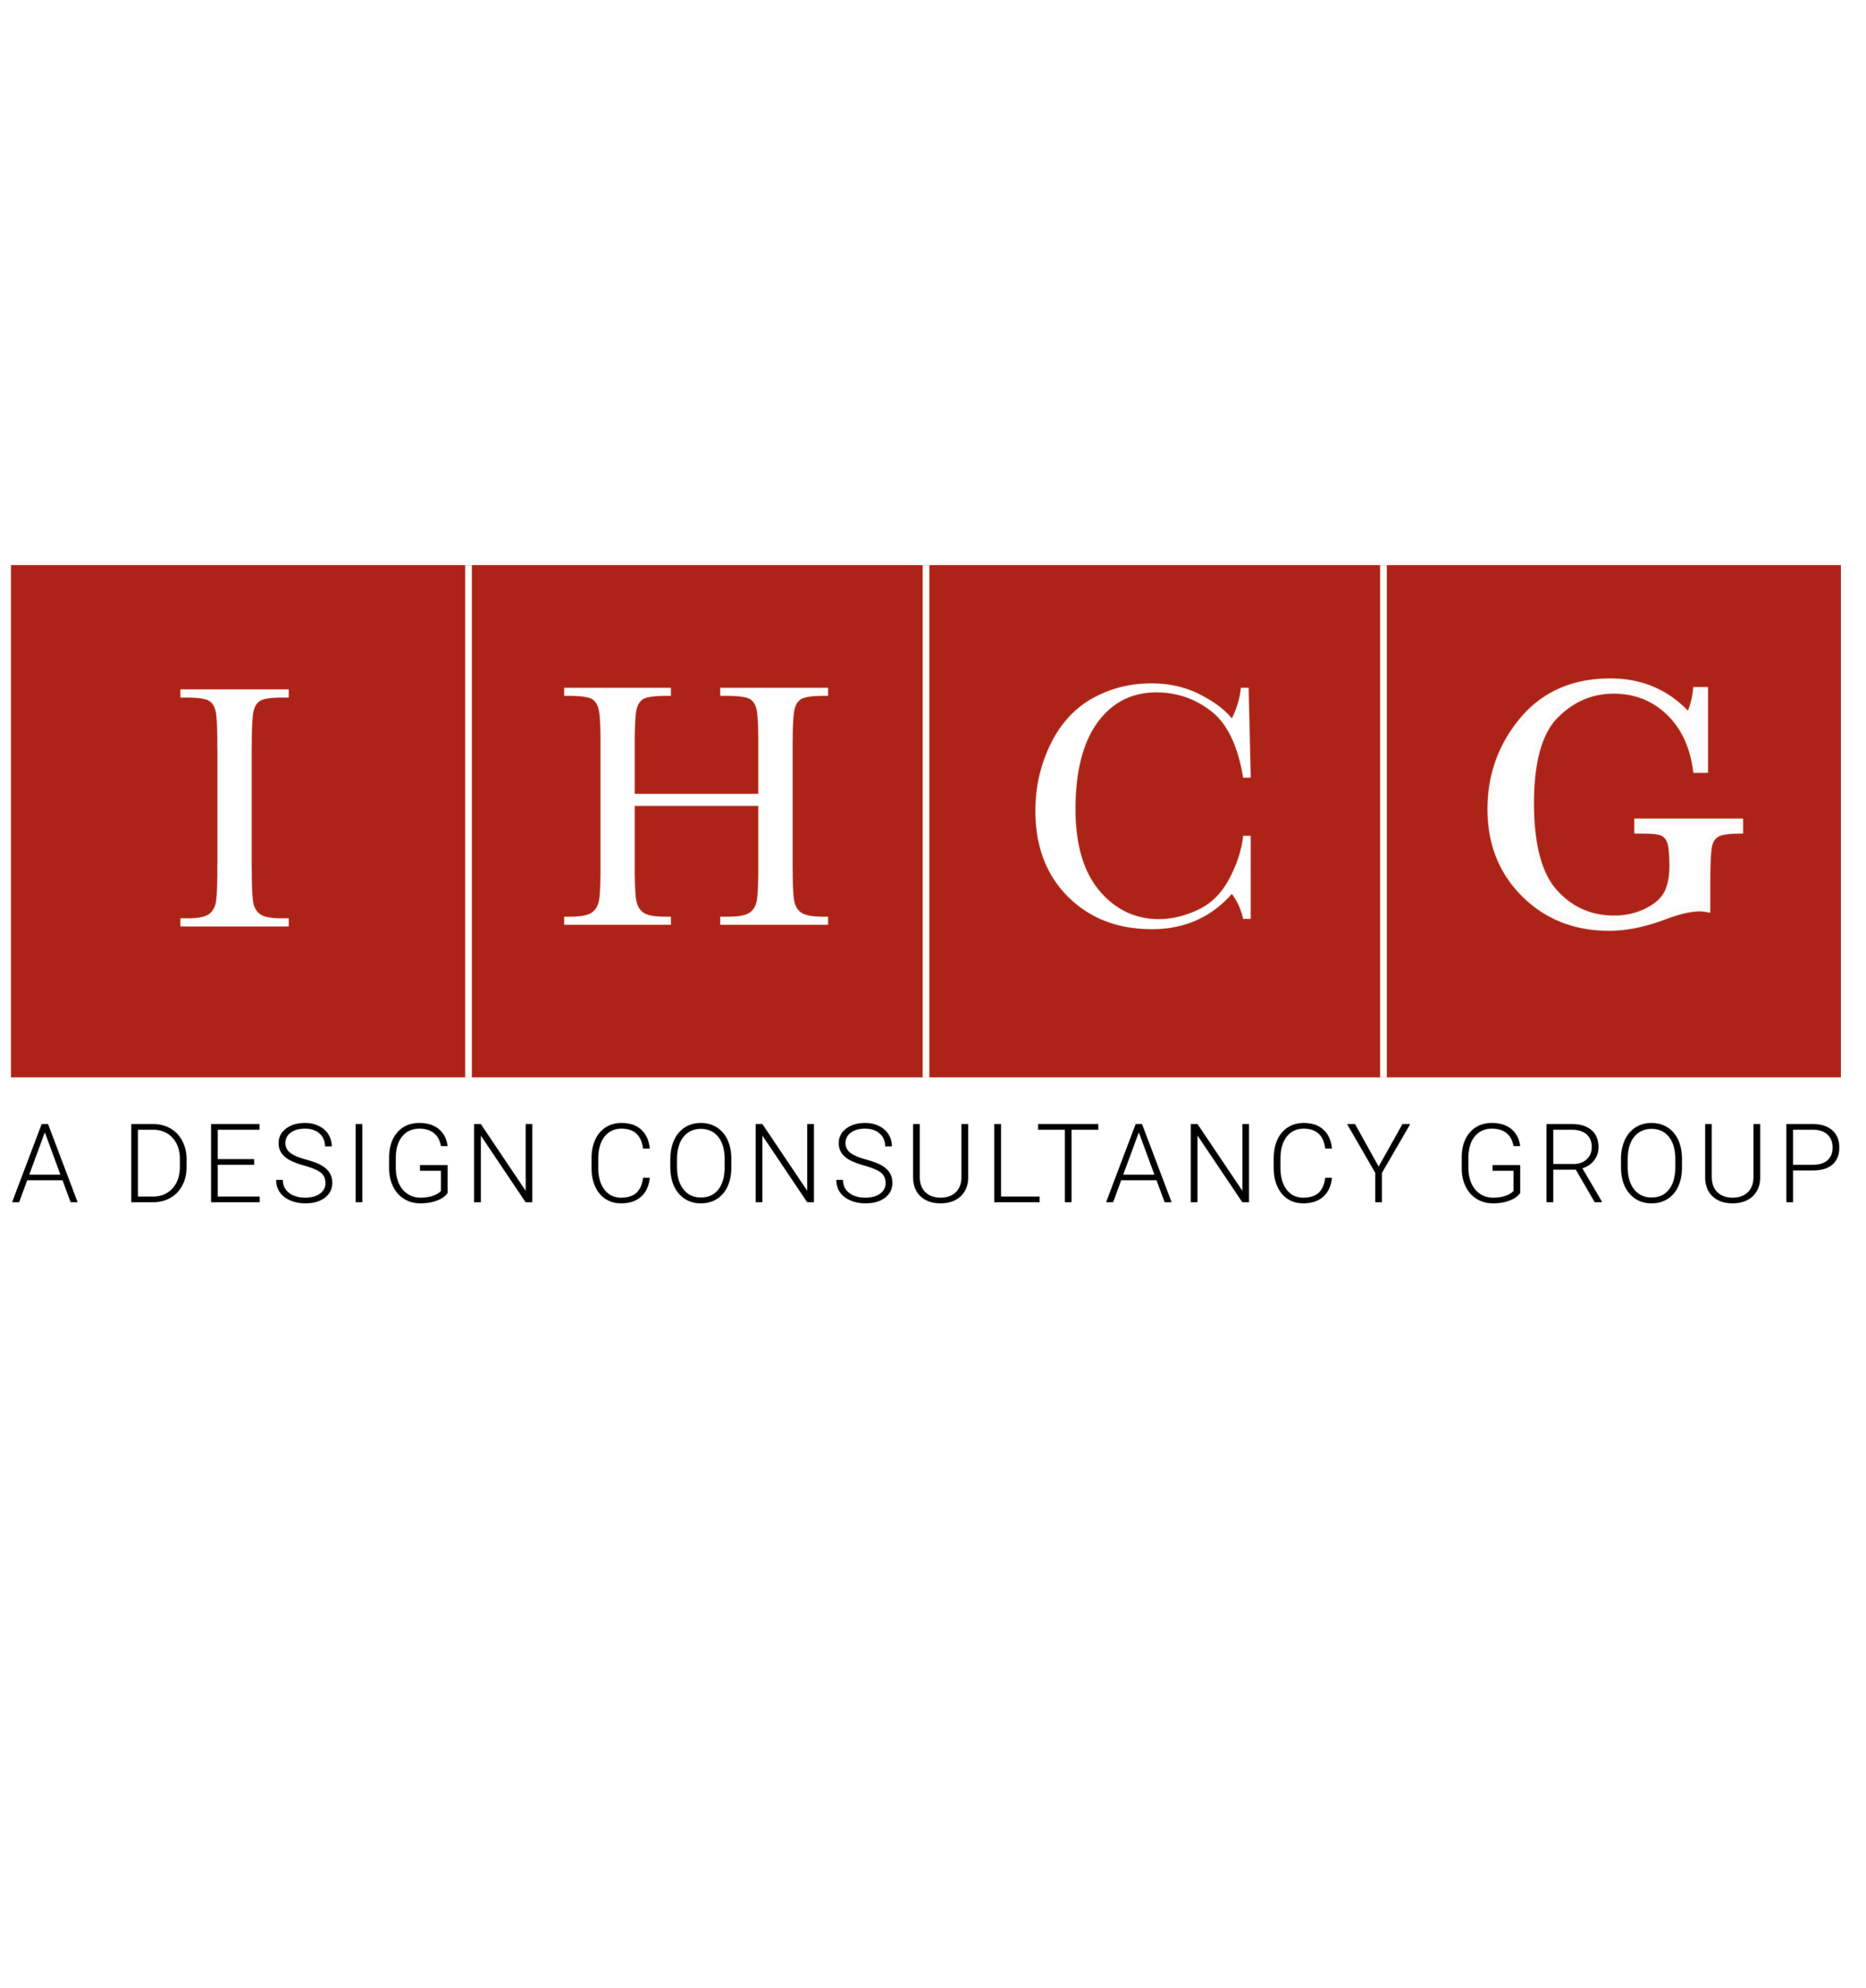 IHCG Corporation